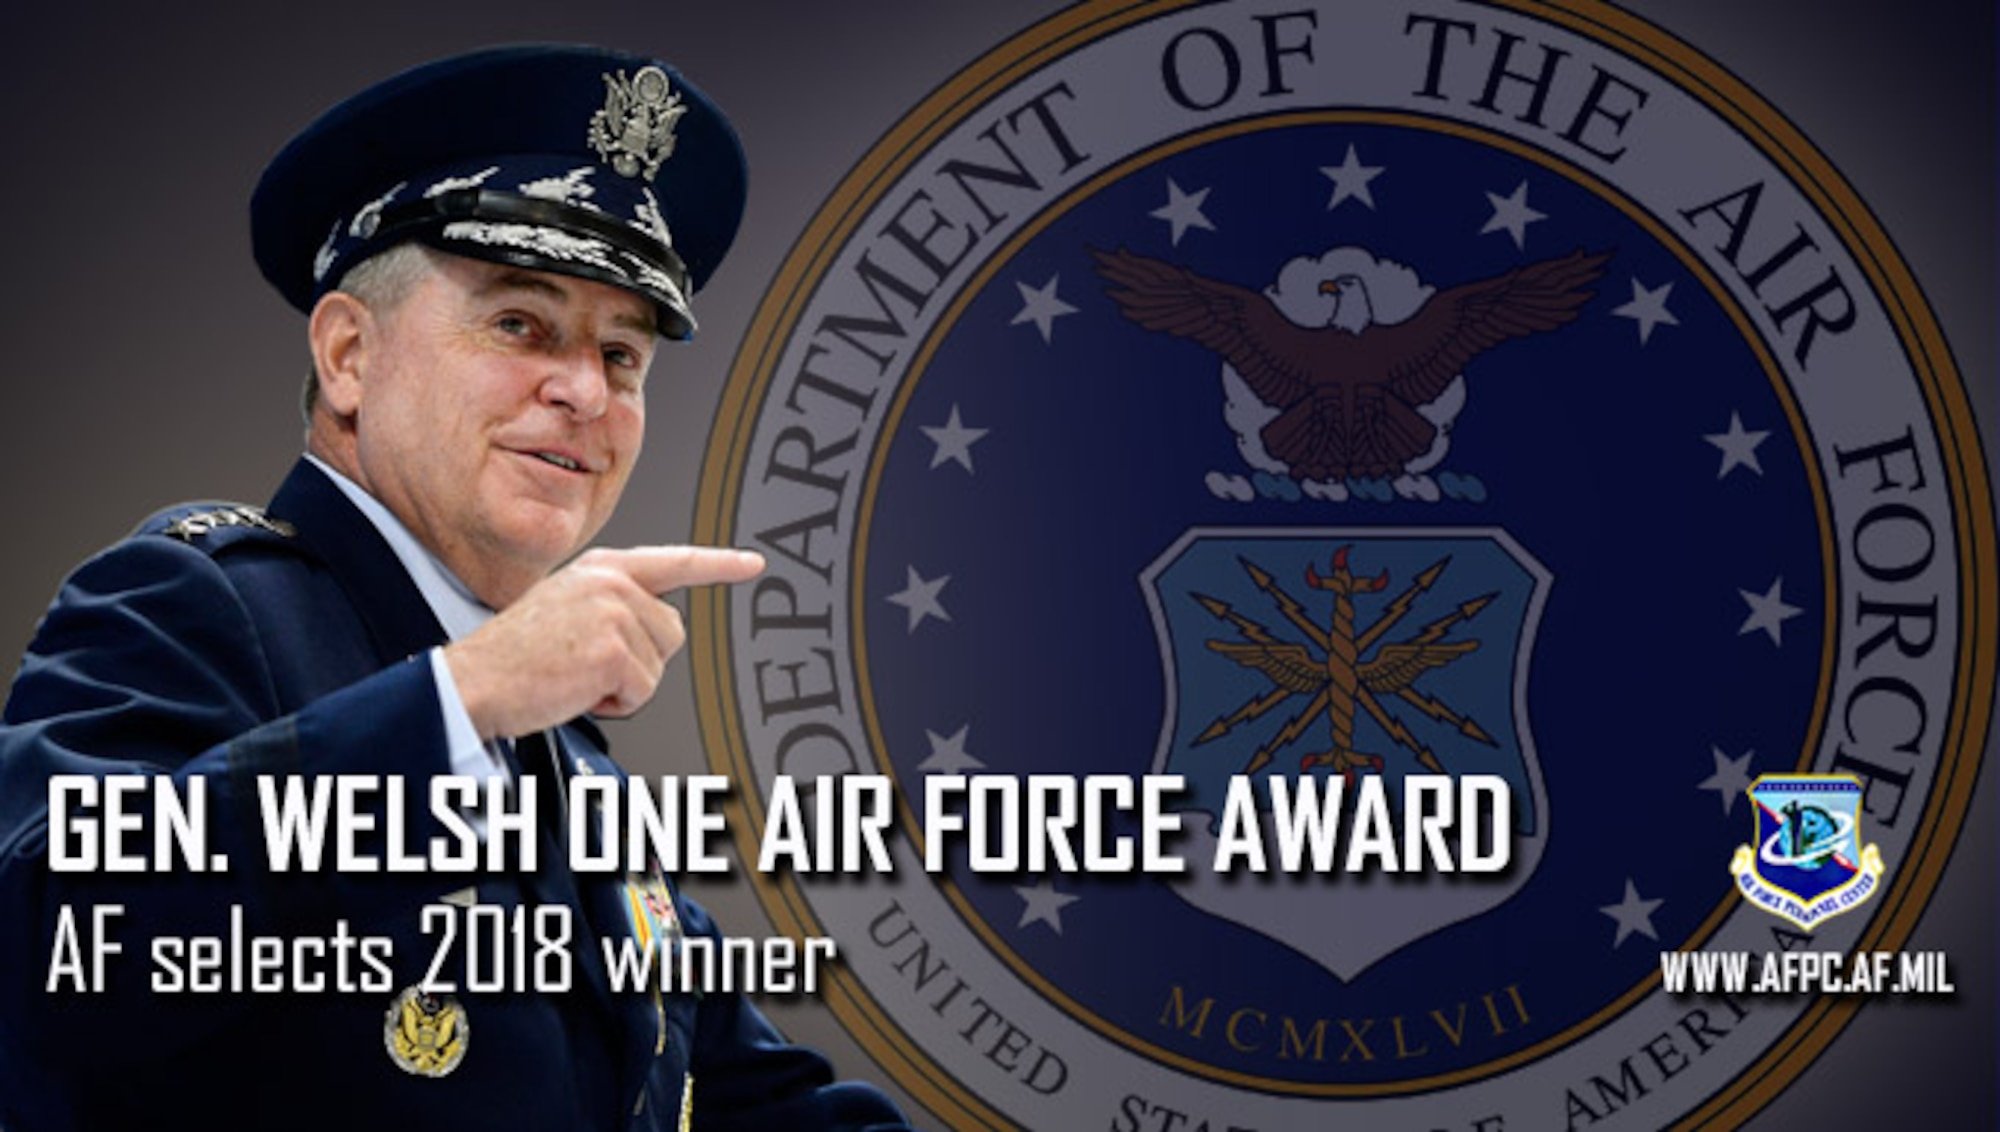 Gen. Welsh One Air Force award; AF selects 2018 winner